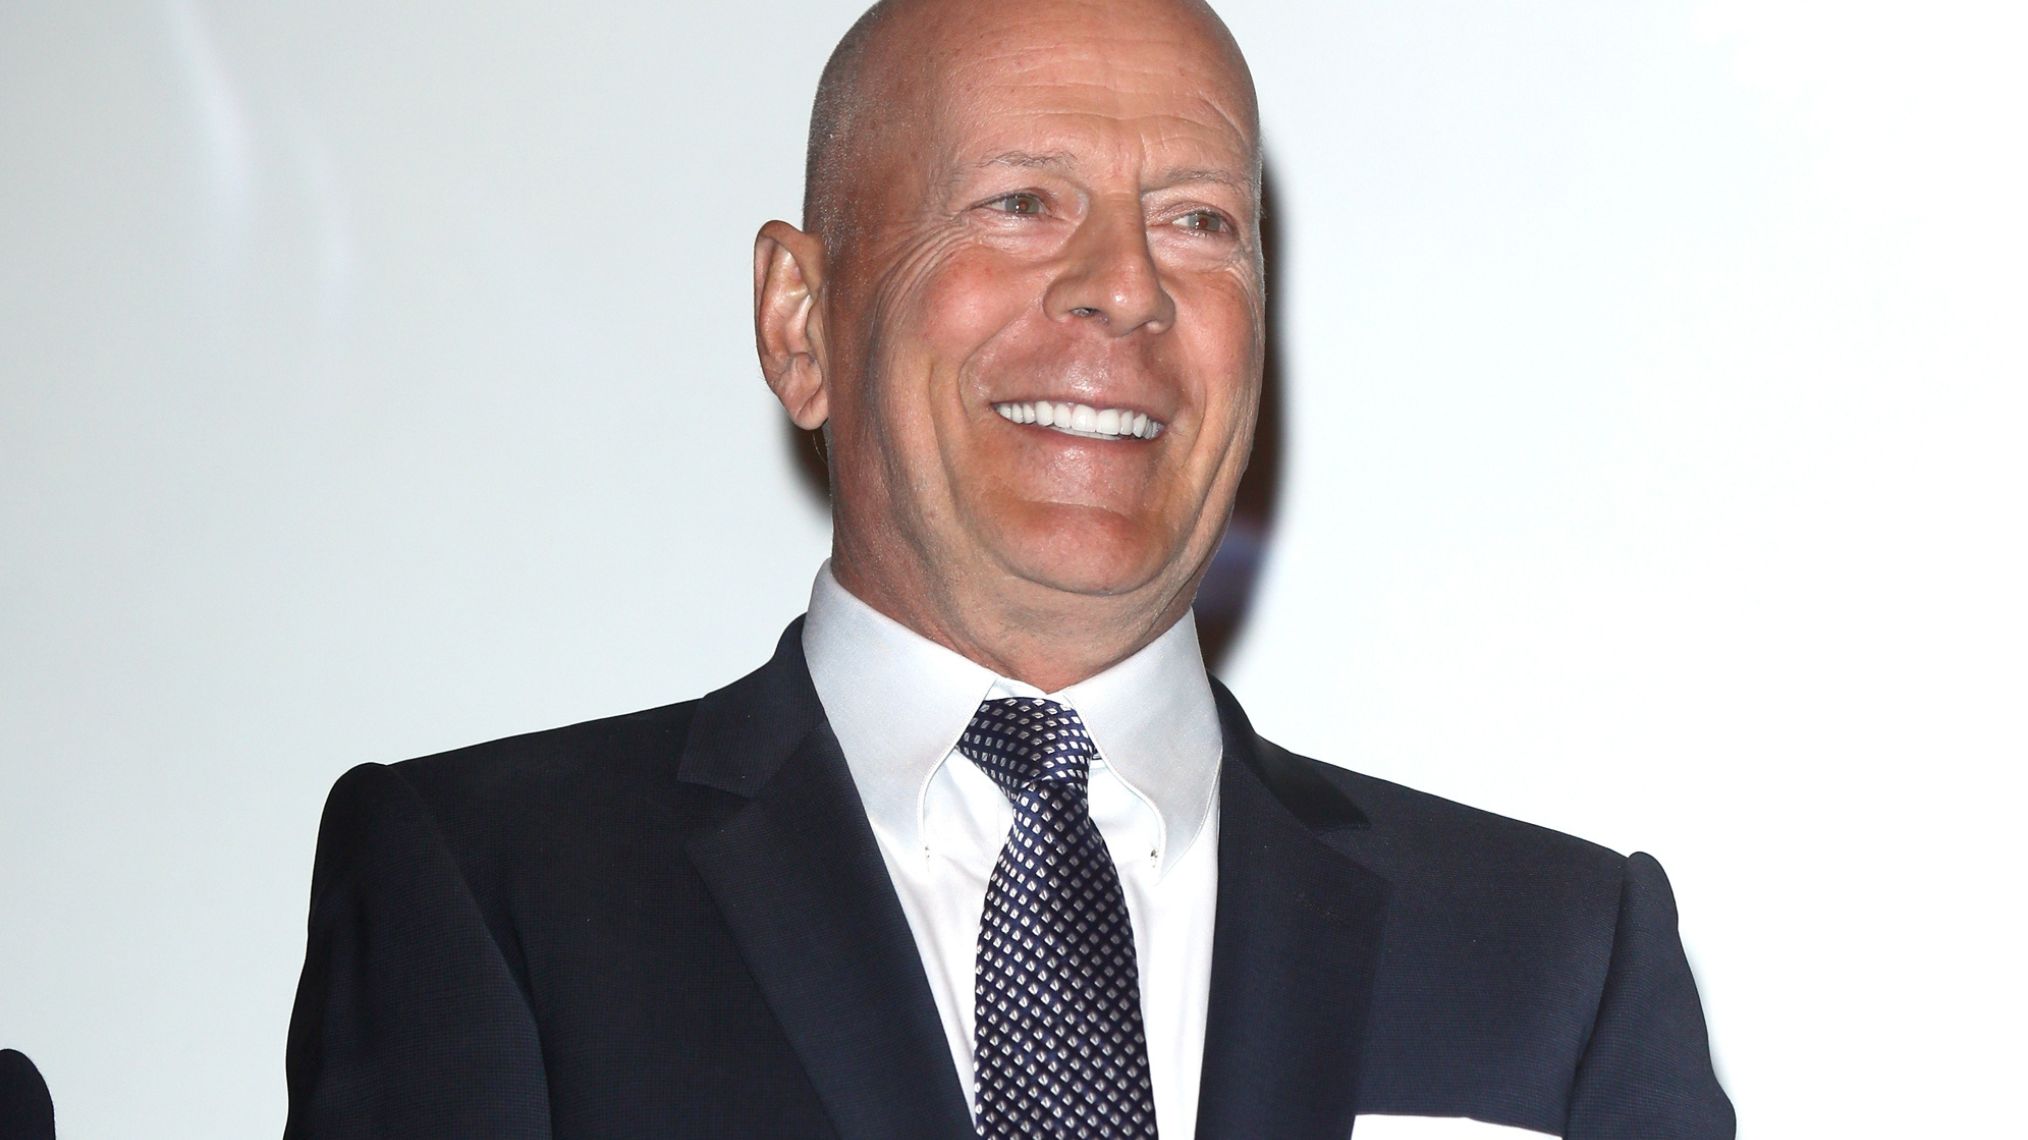 Bruce Willis - Actor, Producer, Musician